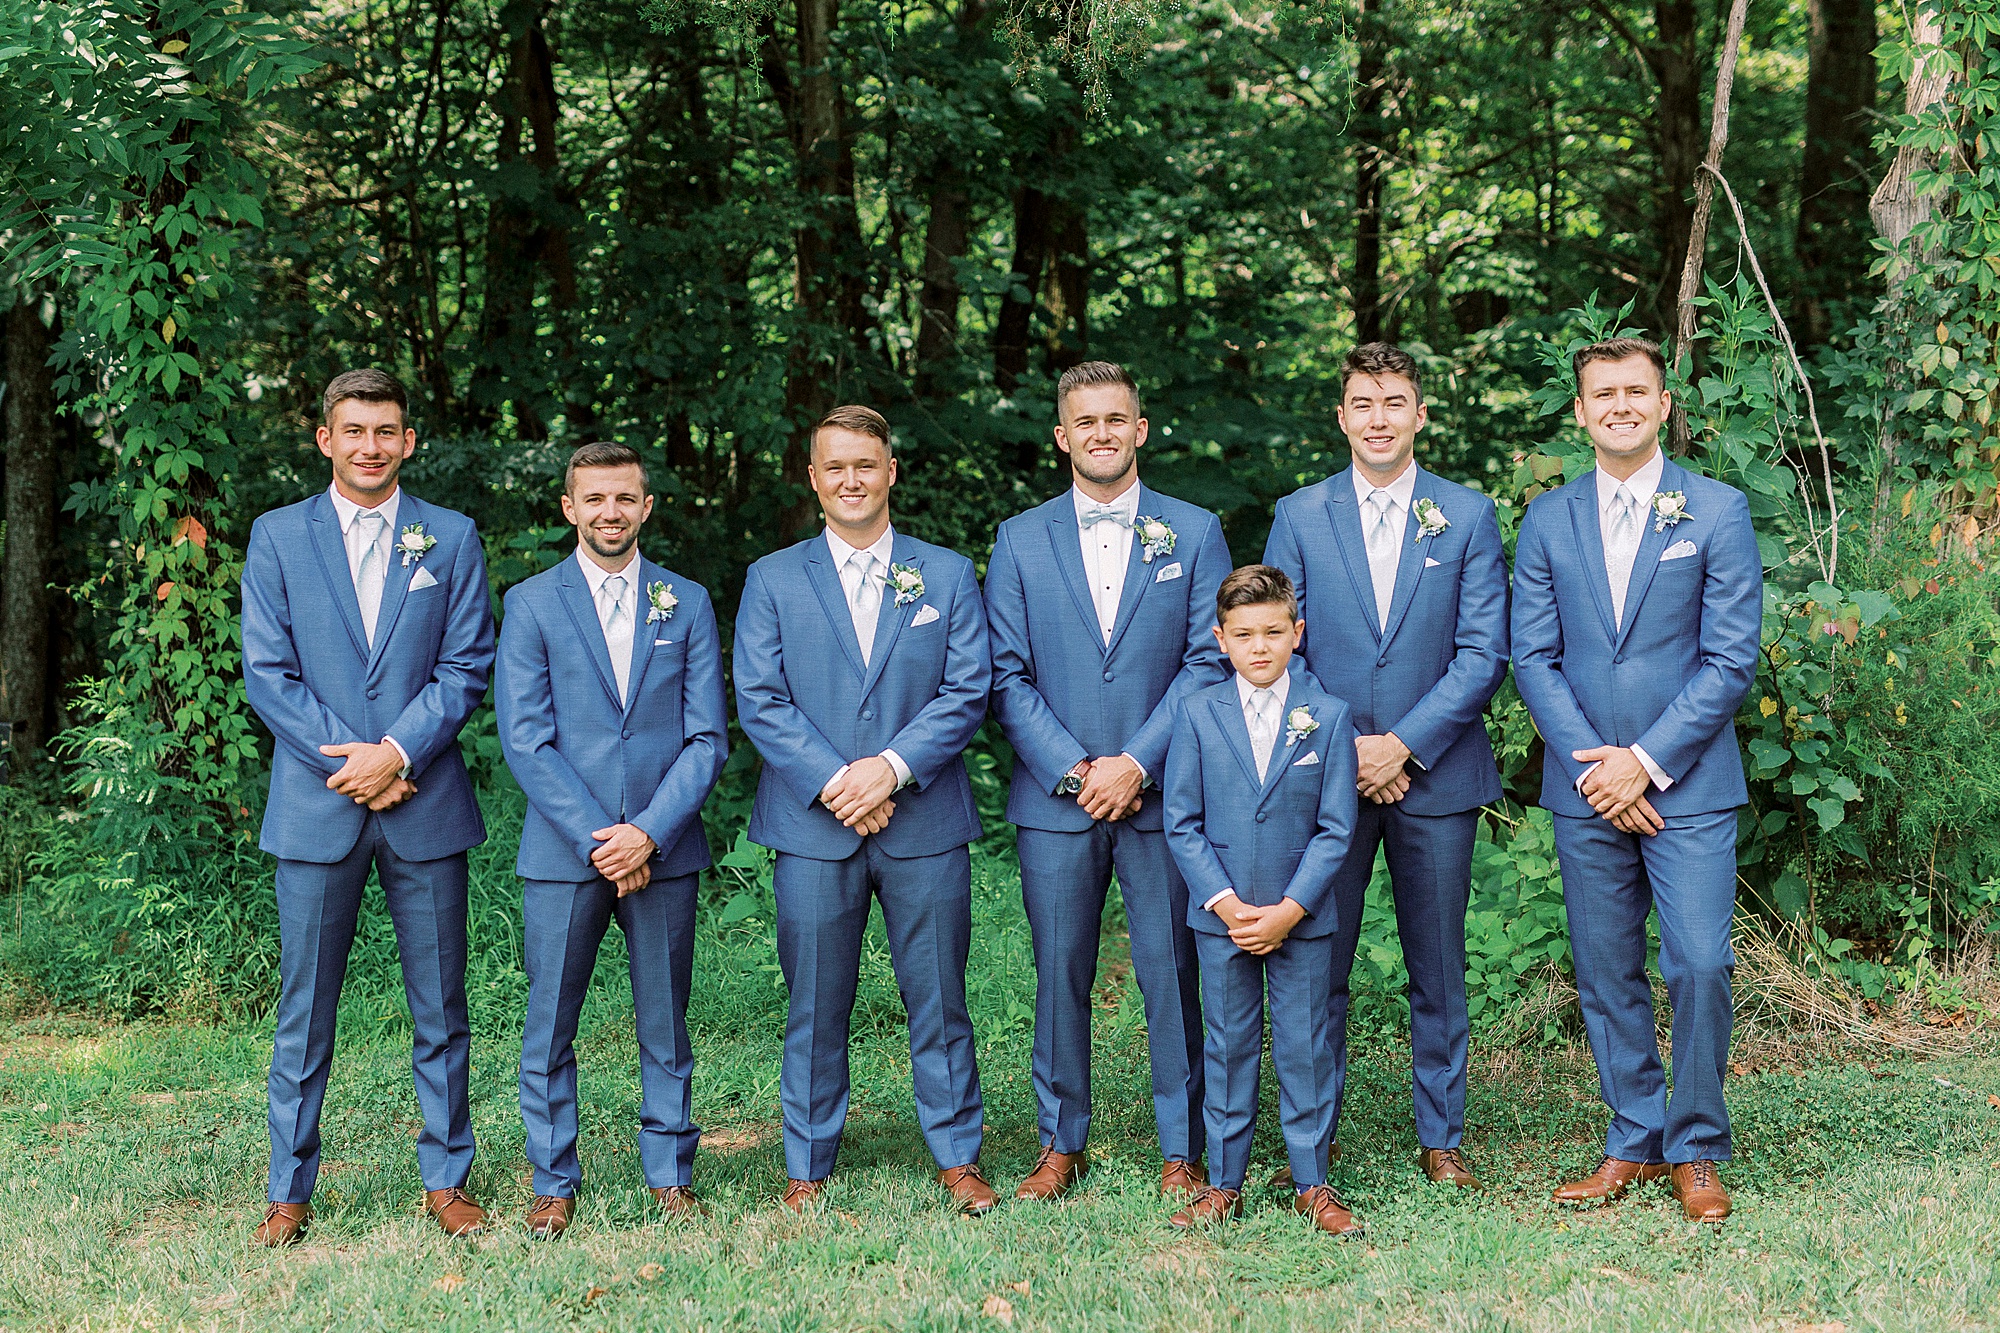 groom and groomsmen pose in navy suits